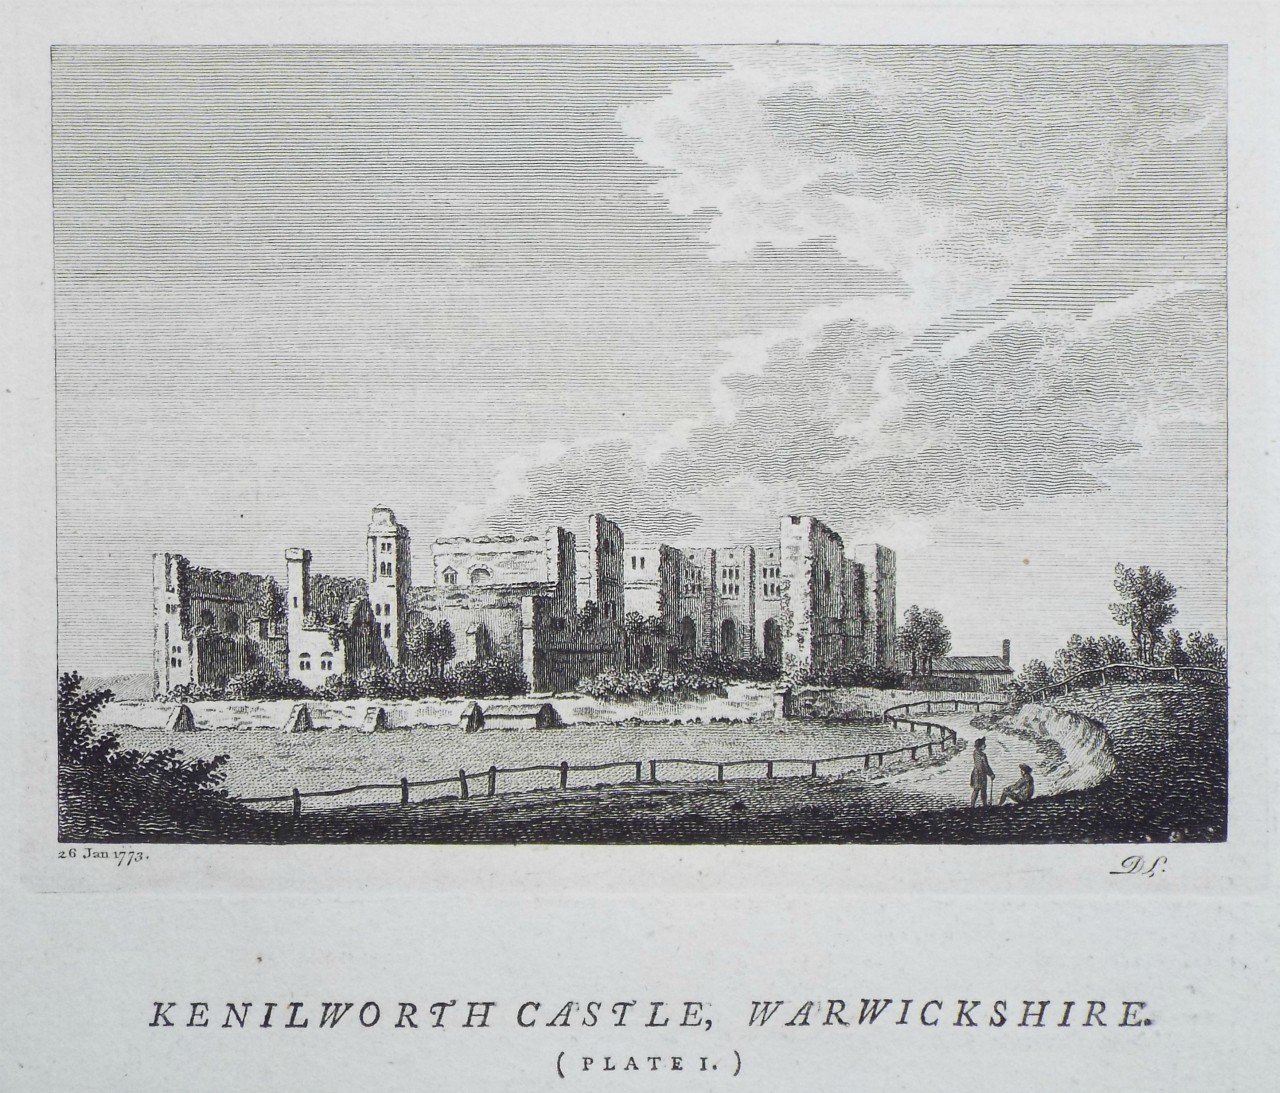 Print - Kenilworth Castle, Warwickshire. (Plate I.)